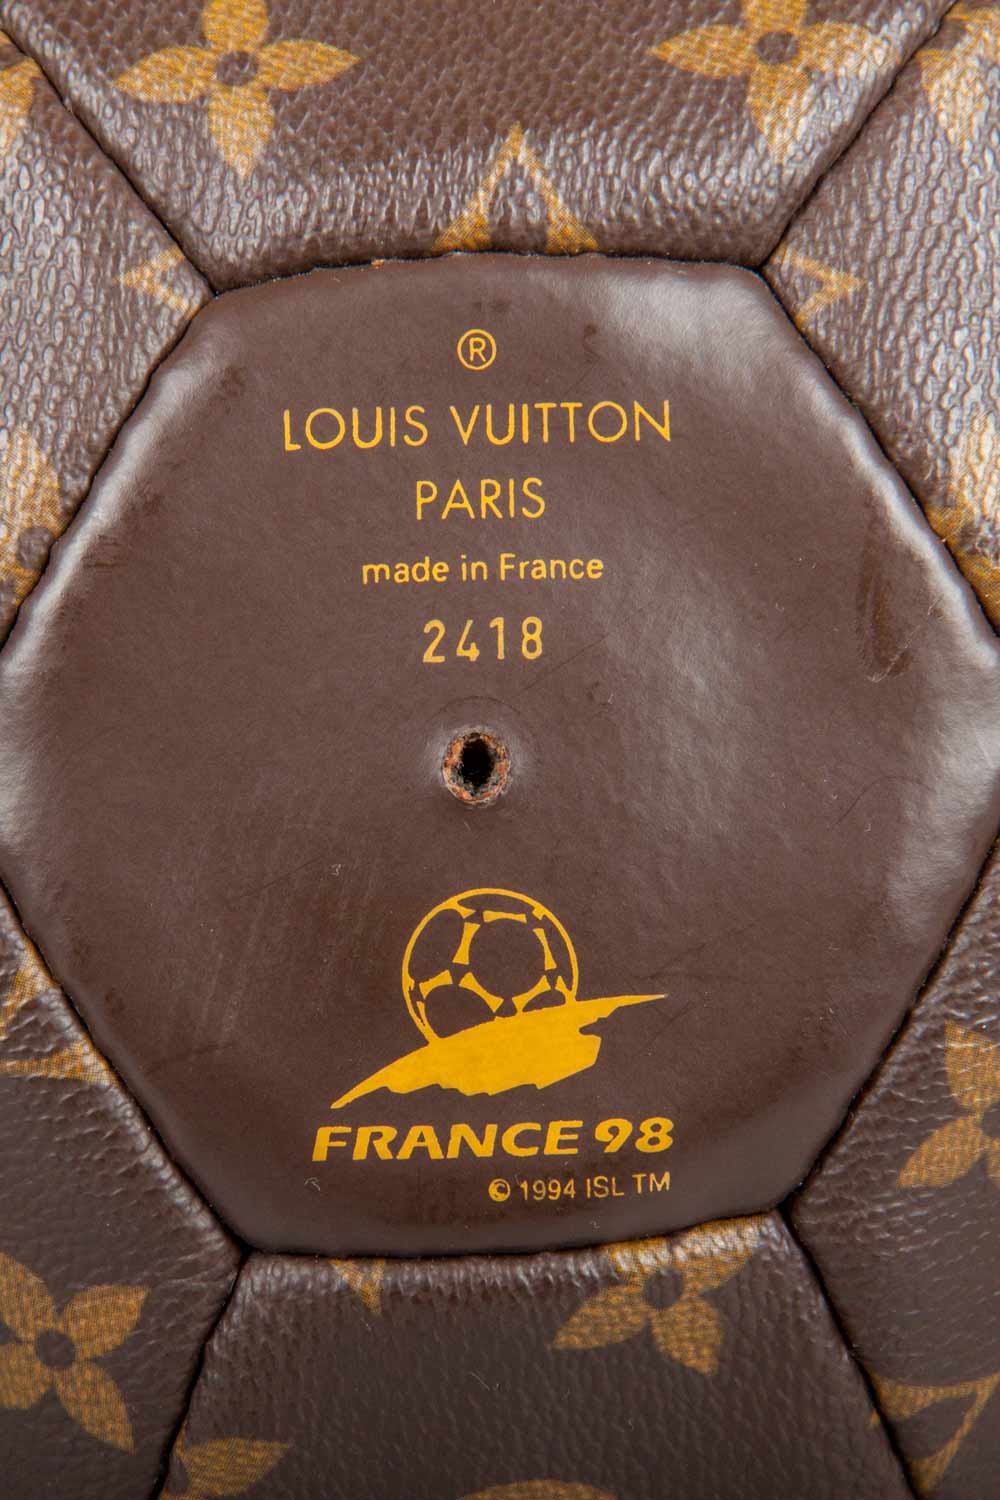 Louis Vuitton Soccer Ball Limited Edition Monogram Football 1998 World Cup  A844